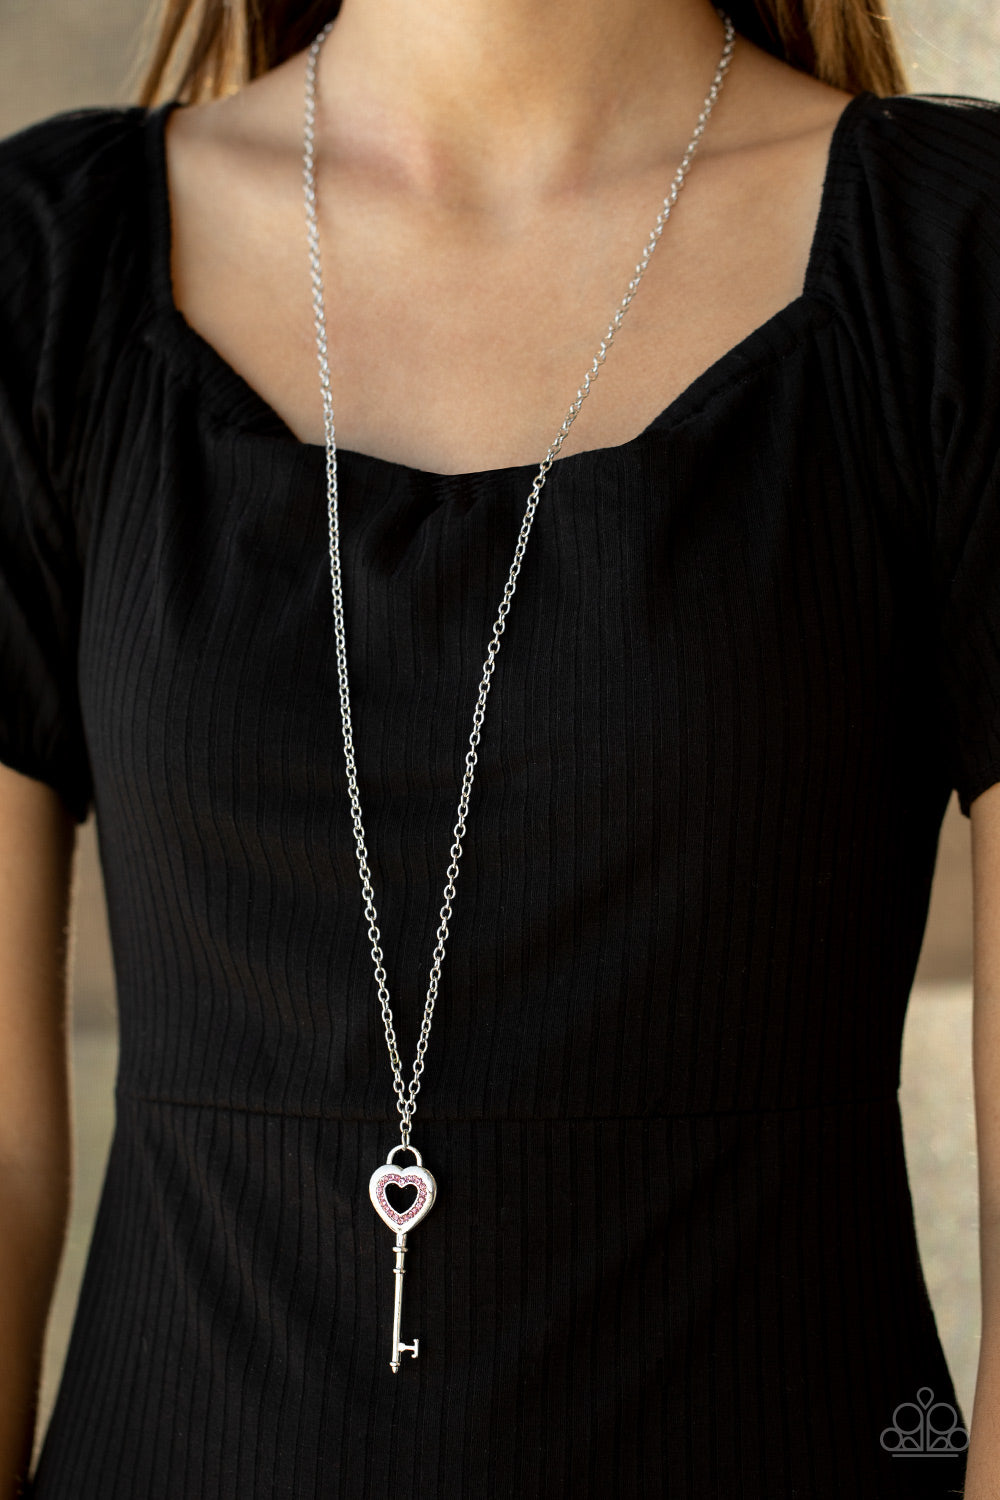 Paparazzi Unlock Your Heart - Pink Rhinestones - Key Pendant - Necklace & Earrings - $5 Jewelry with Ashley Swint